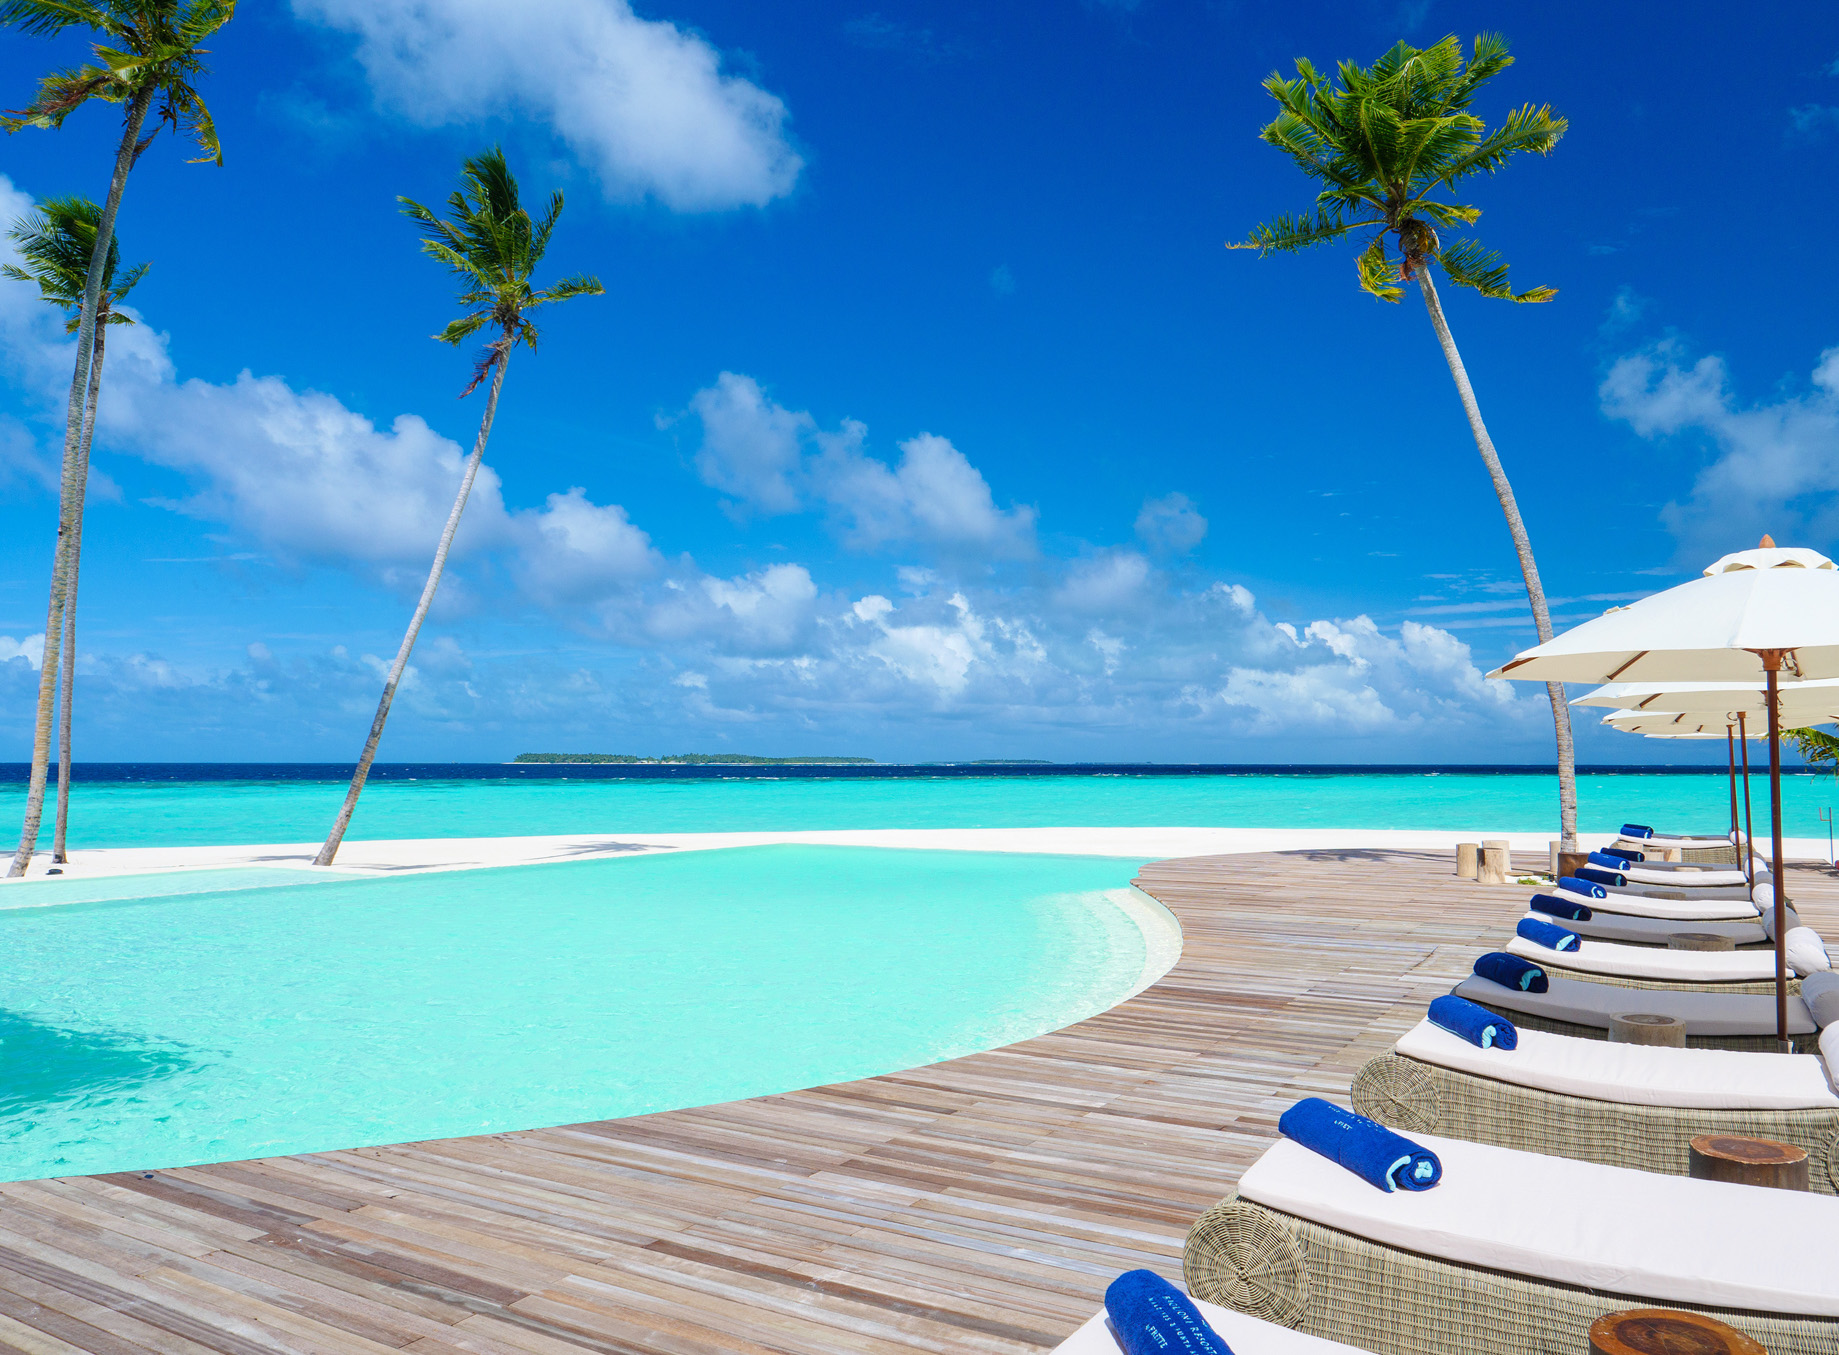 Baglioni Resort Maldives – Maagau Island, Rinbudhoo, Maldives – Infinity Pool Deck Ocean View